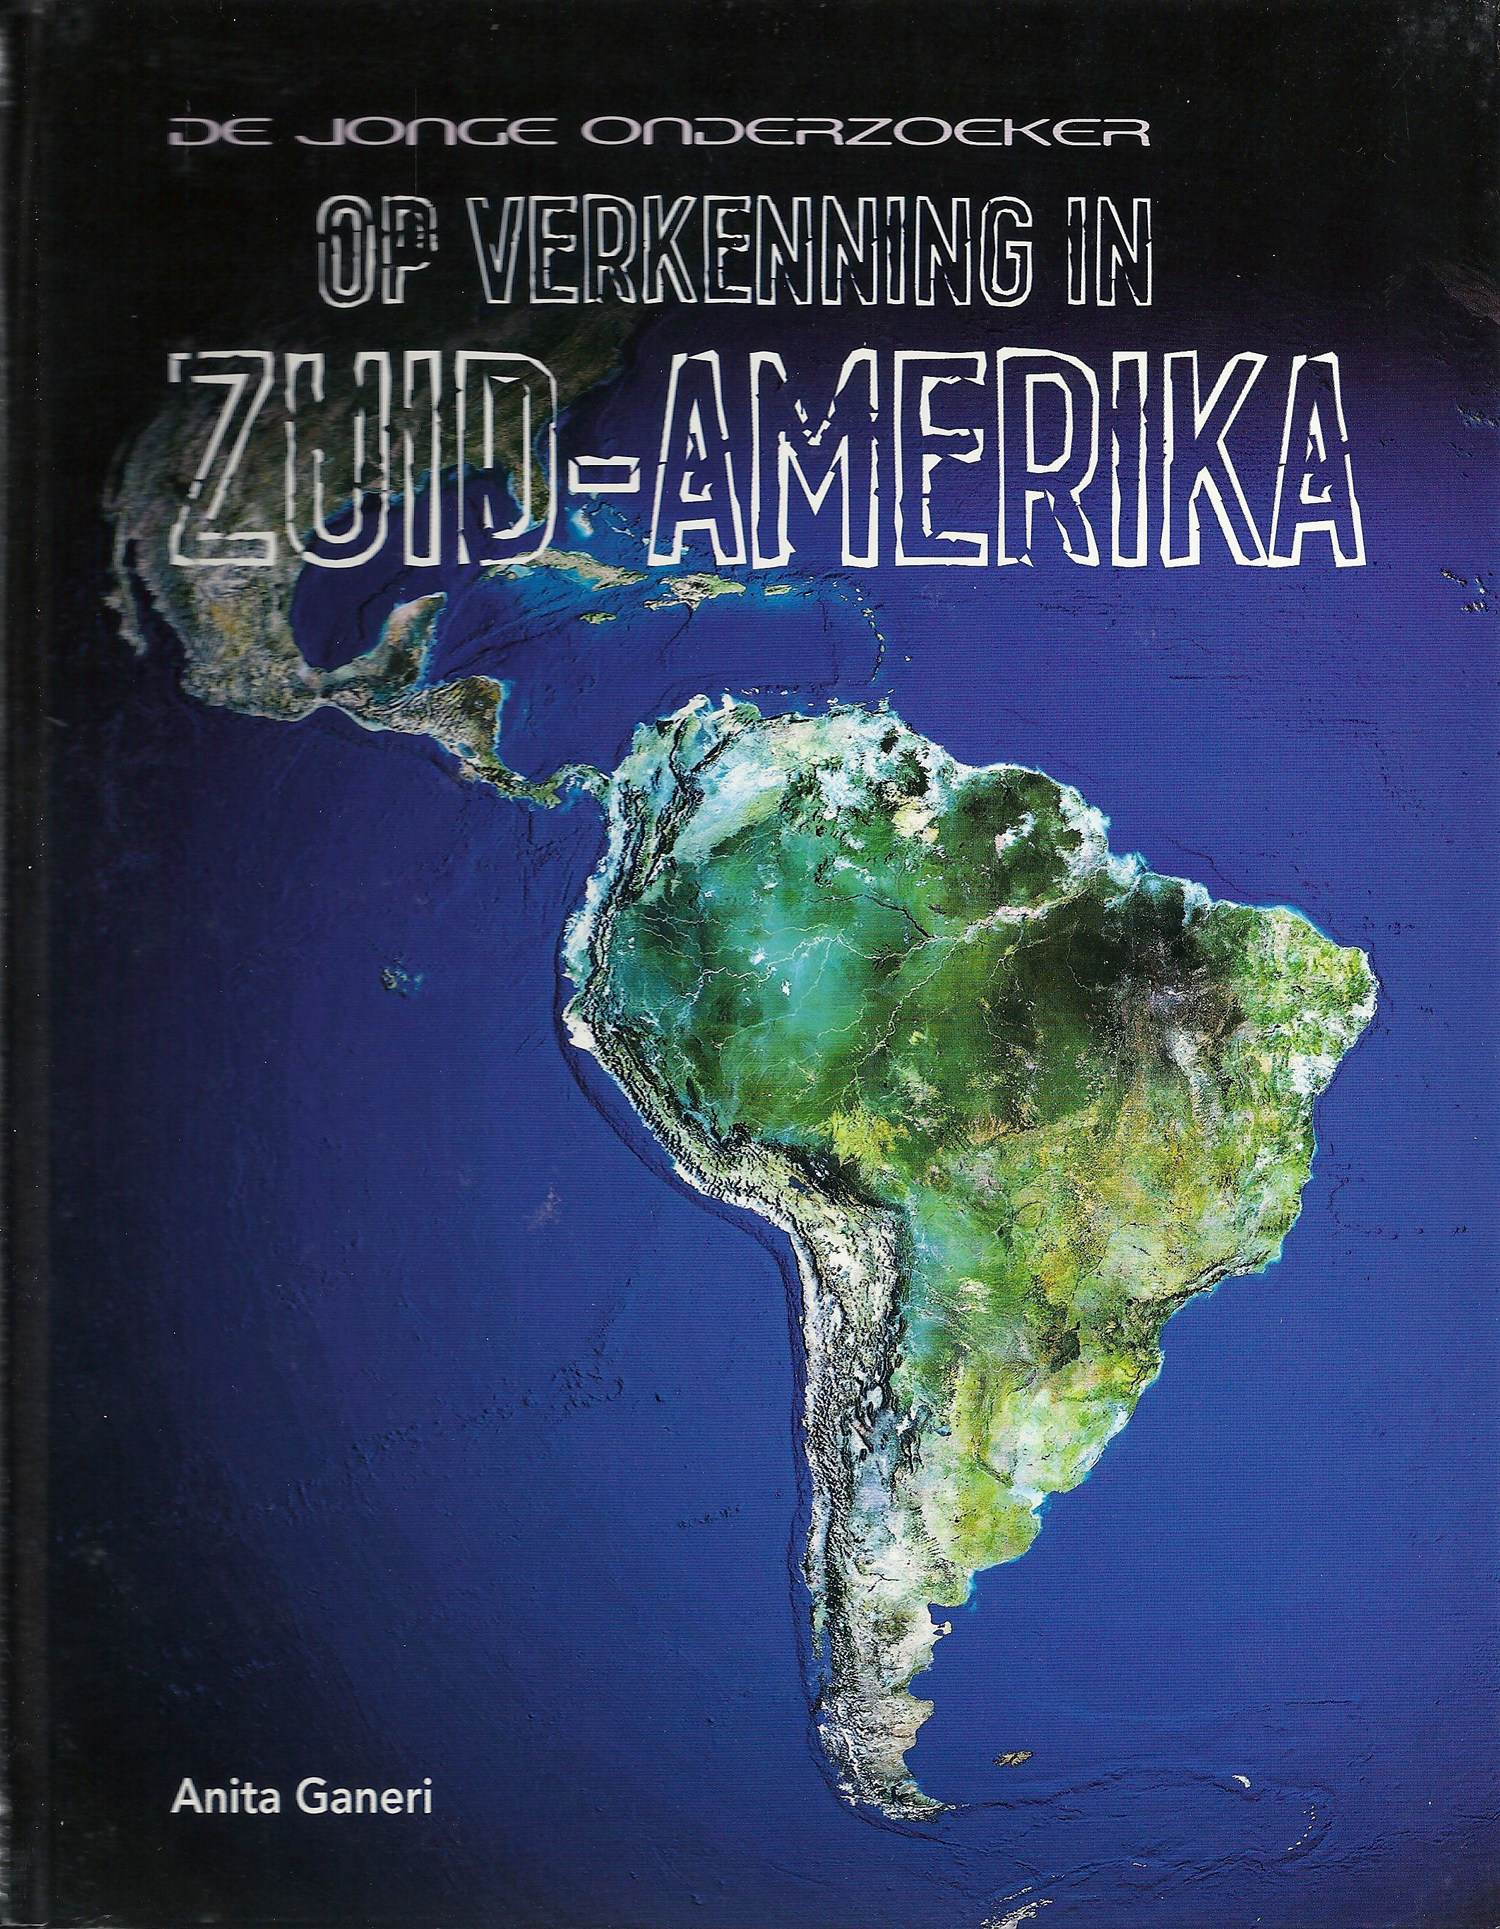 CNBDJO029 Zuid-Amerika